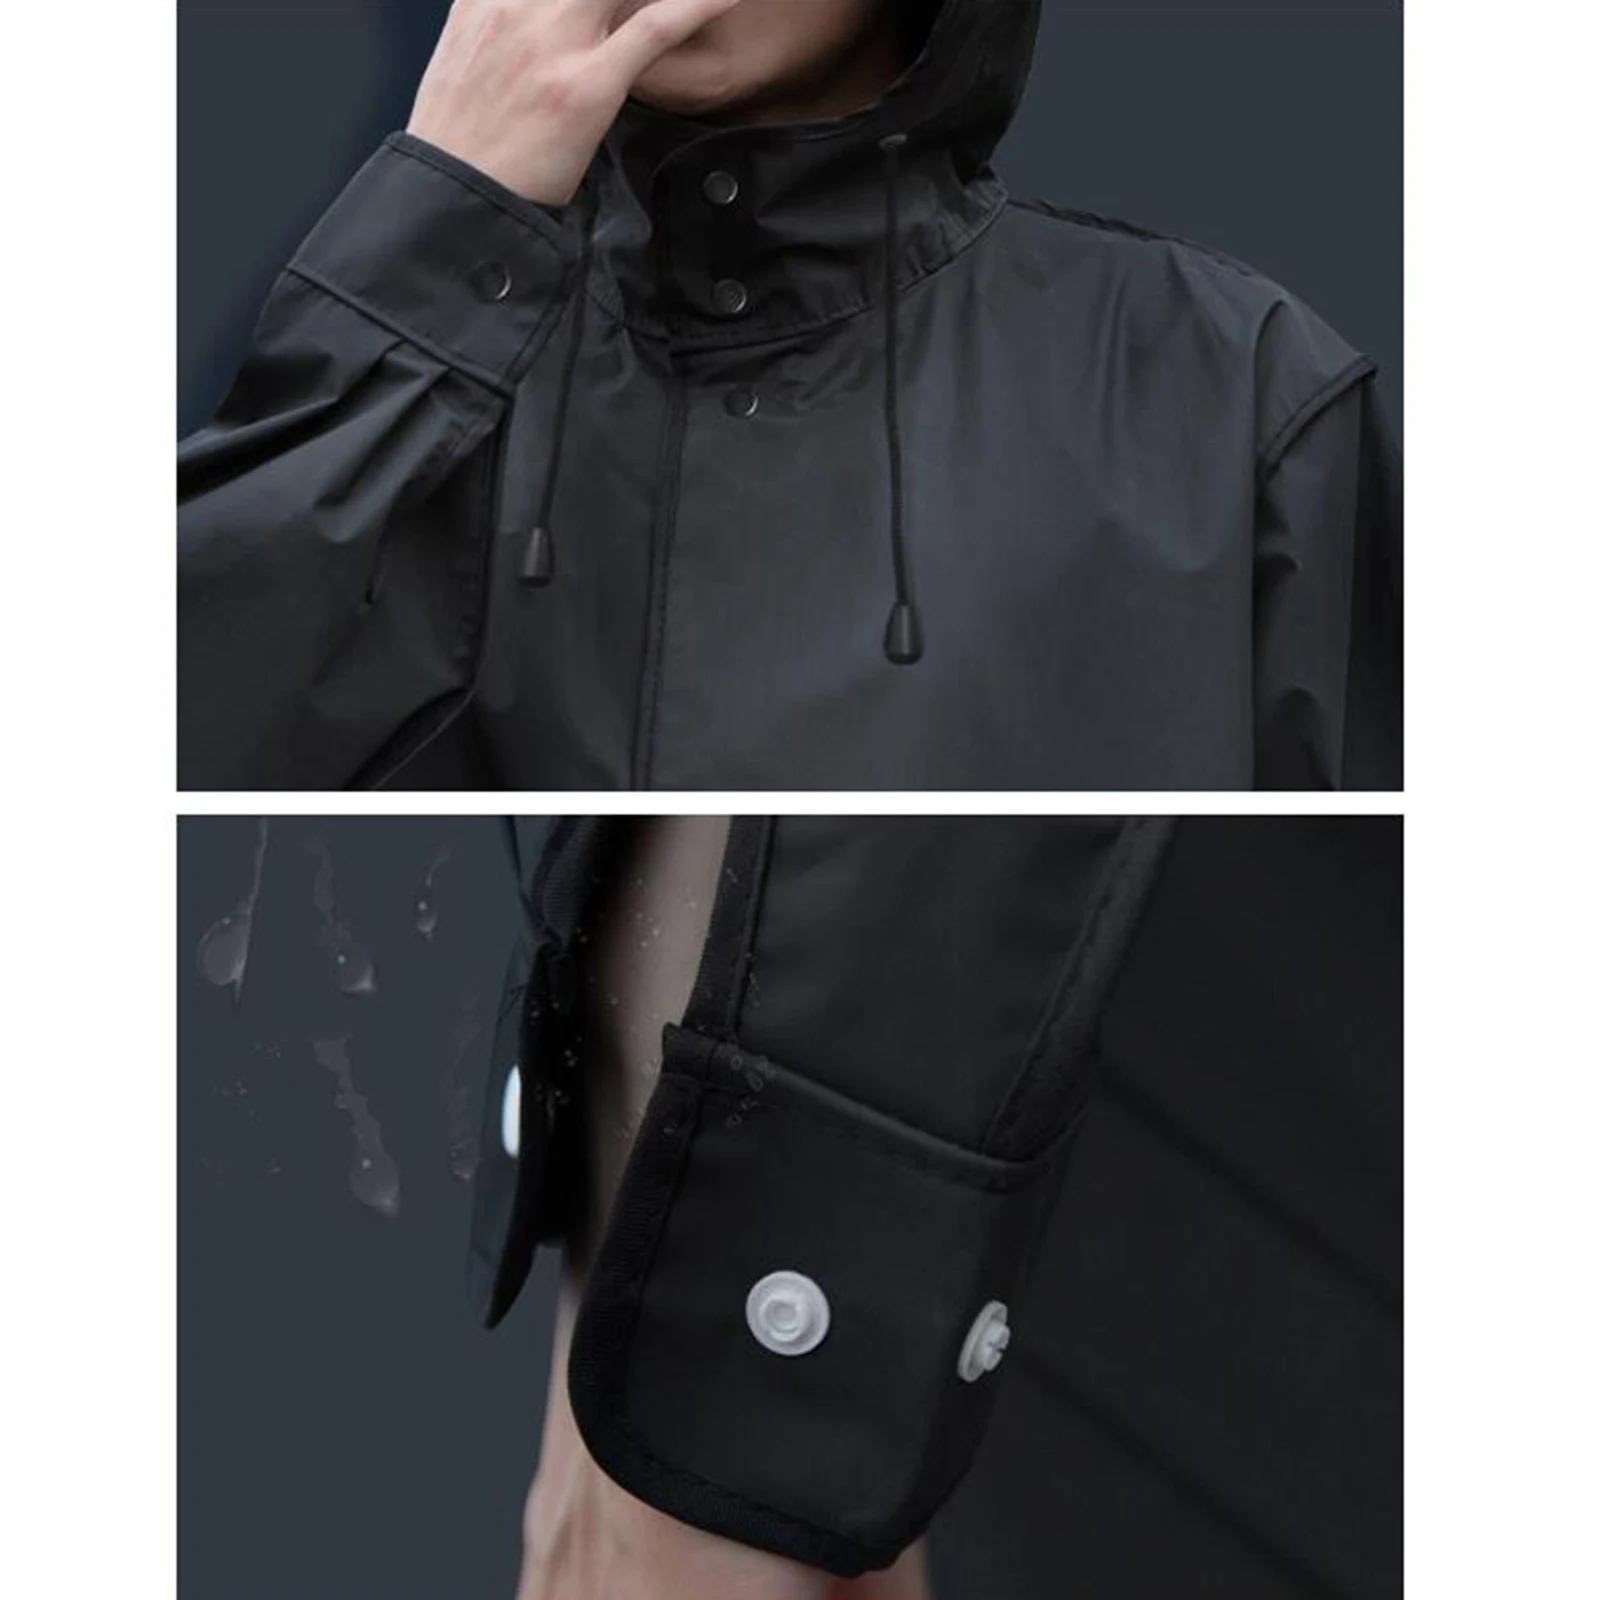 Unisex Reusable Raincoat Womens Mens Poncho Quick-Drying Rain Coats Jacket Poncho Hiking Junior Rainwear Outerwear Rain Jacket